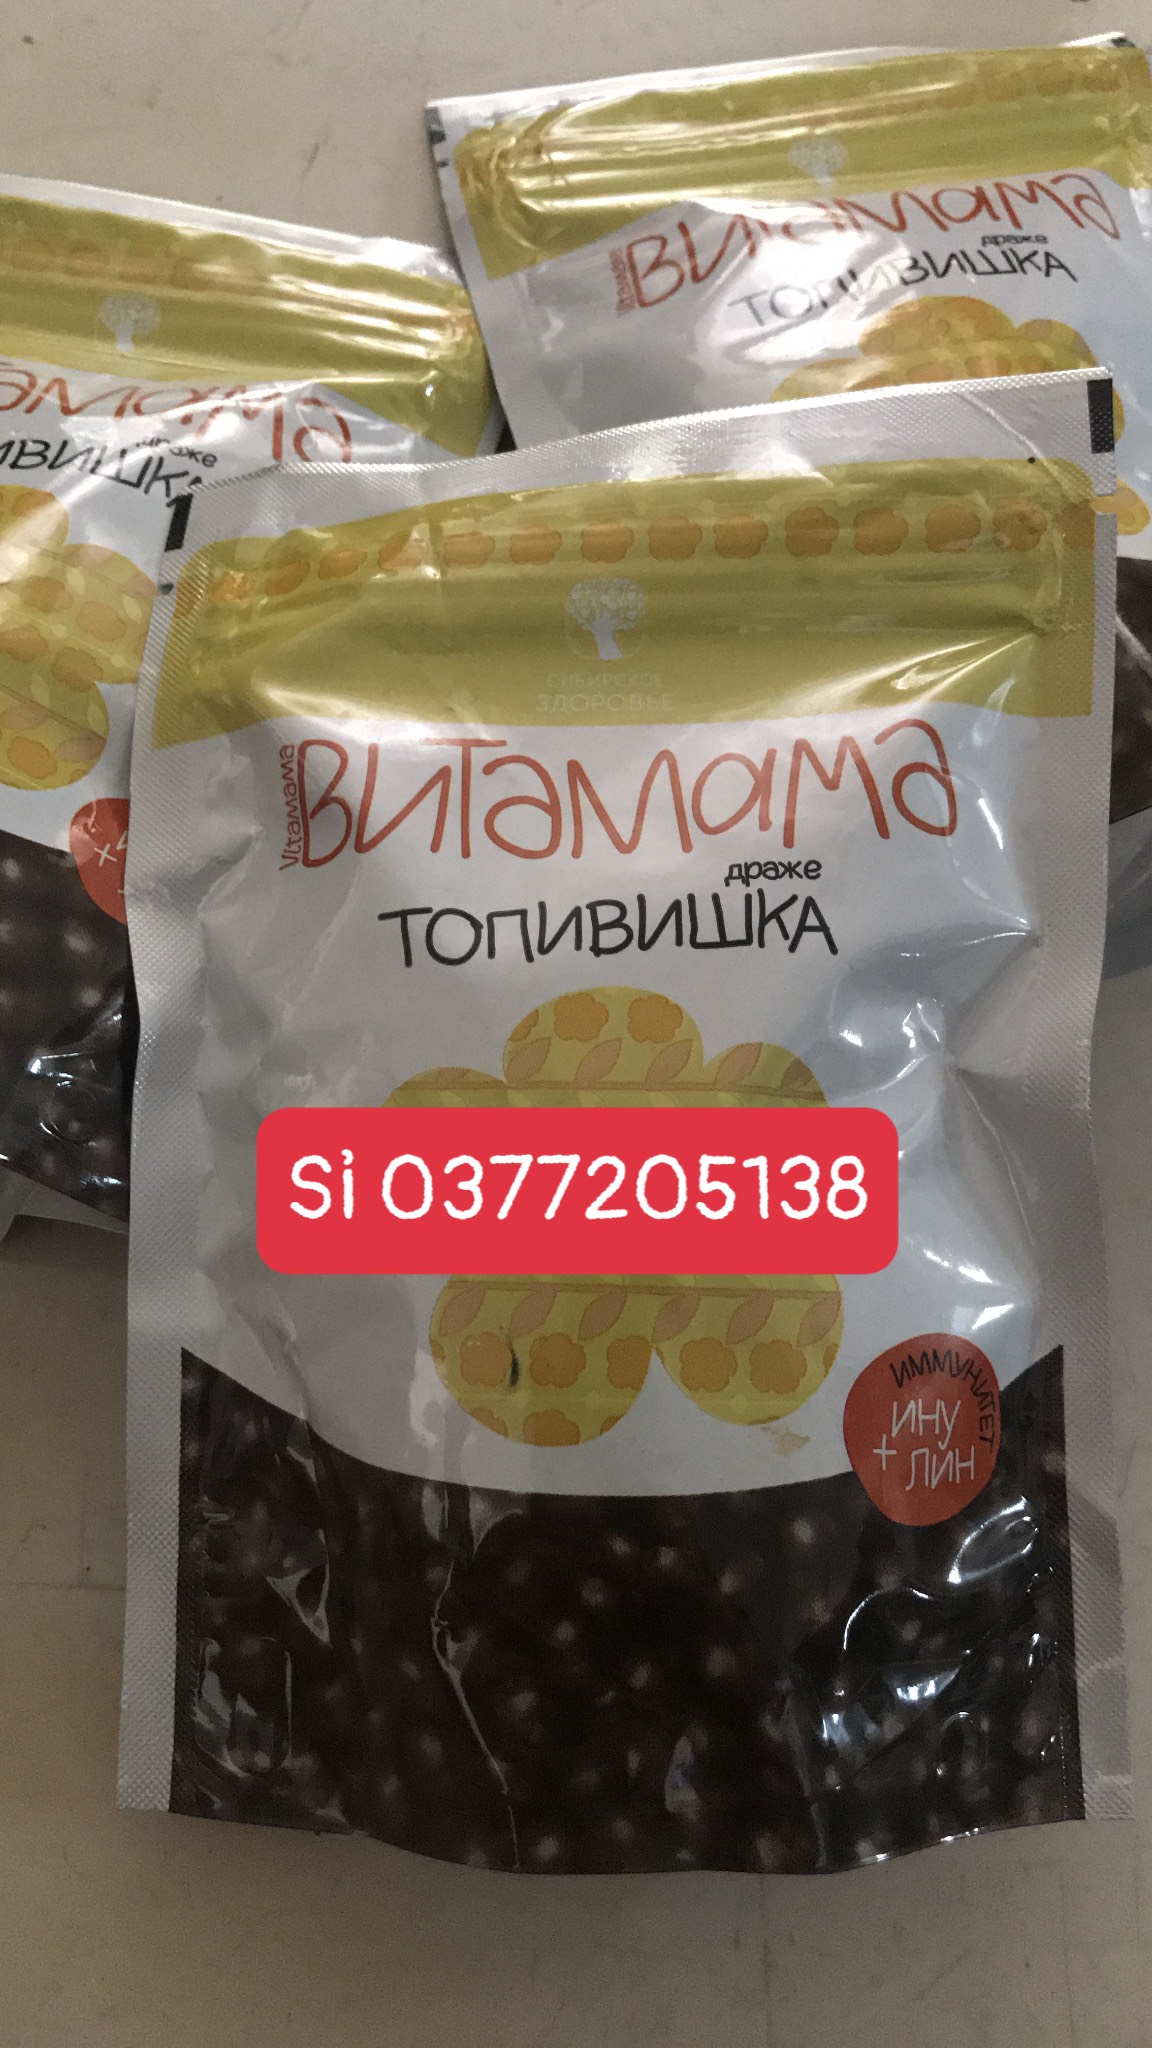 VitaMama Siberian immunity sweets